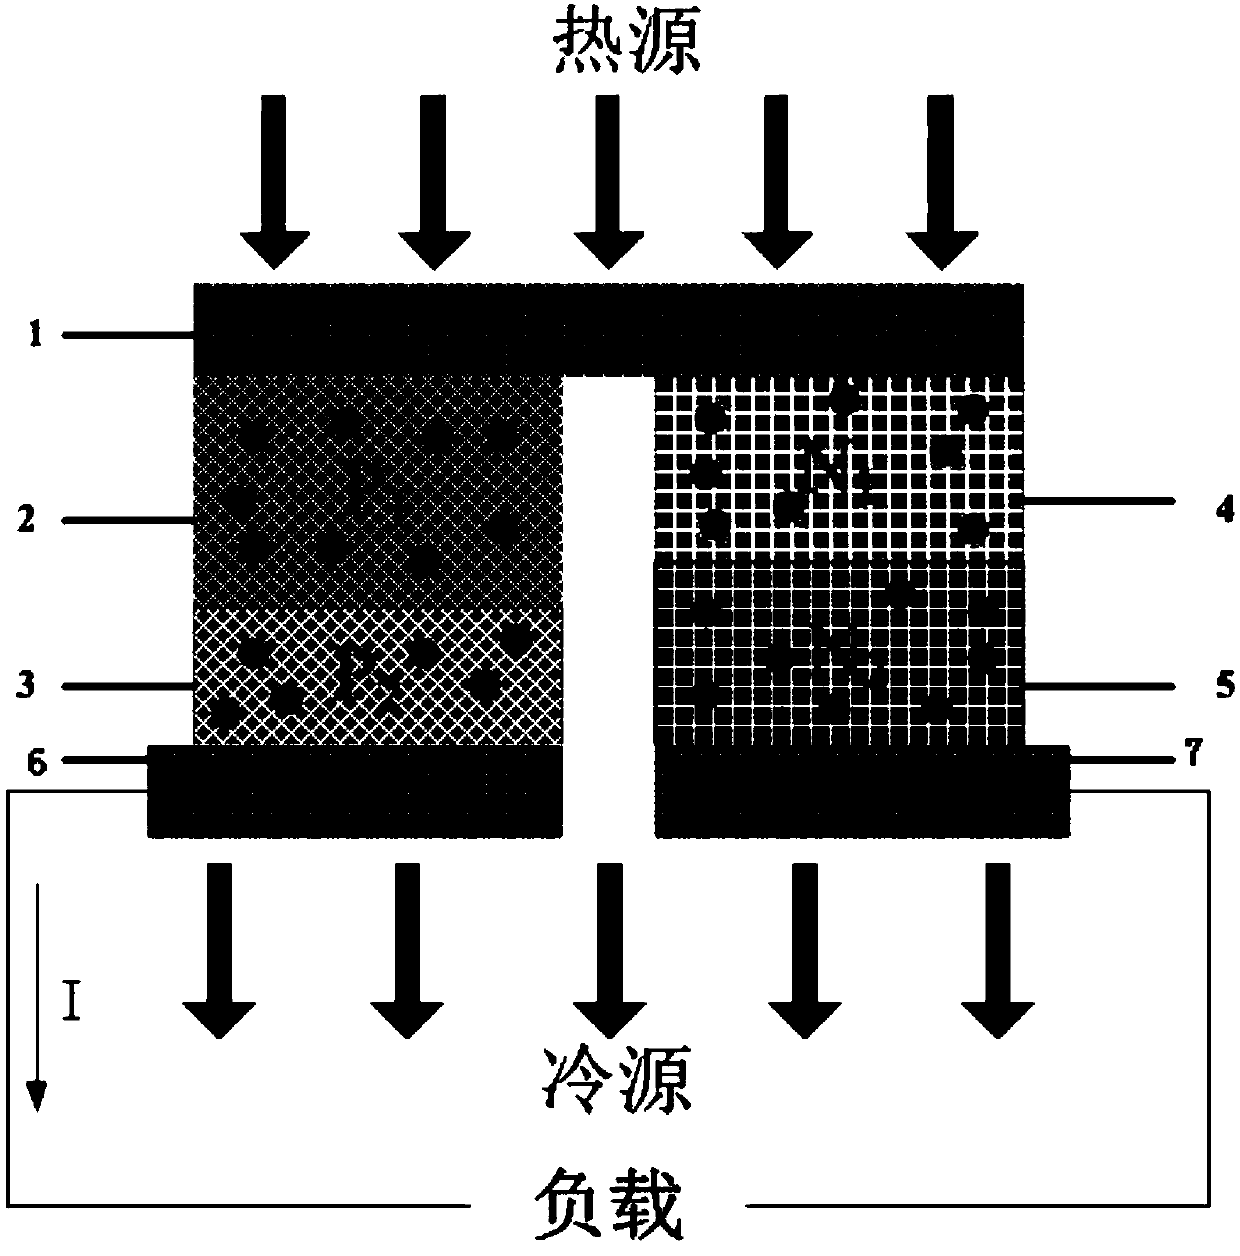 Segmental thermoelectric generator structure design method